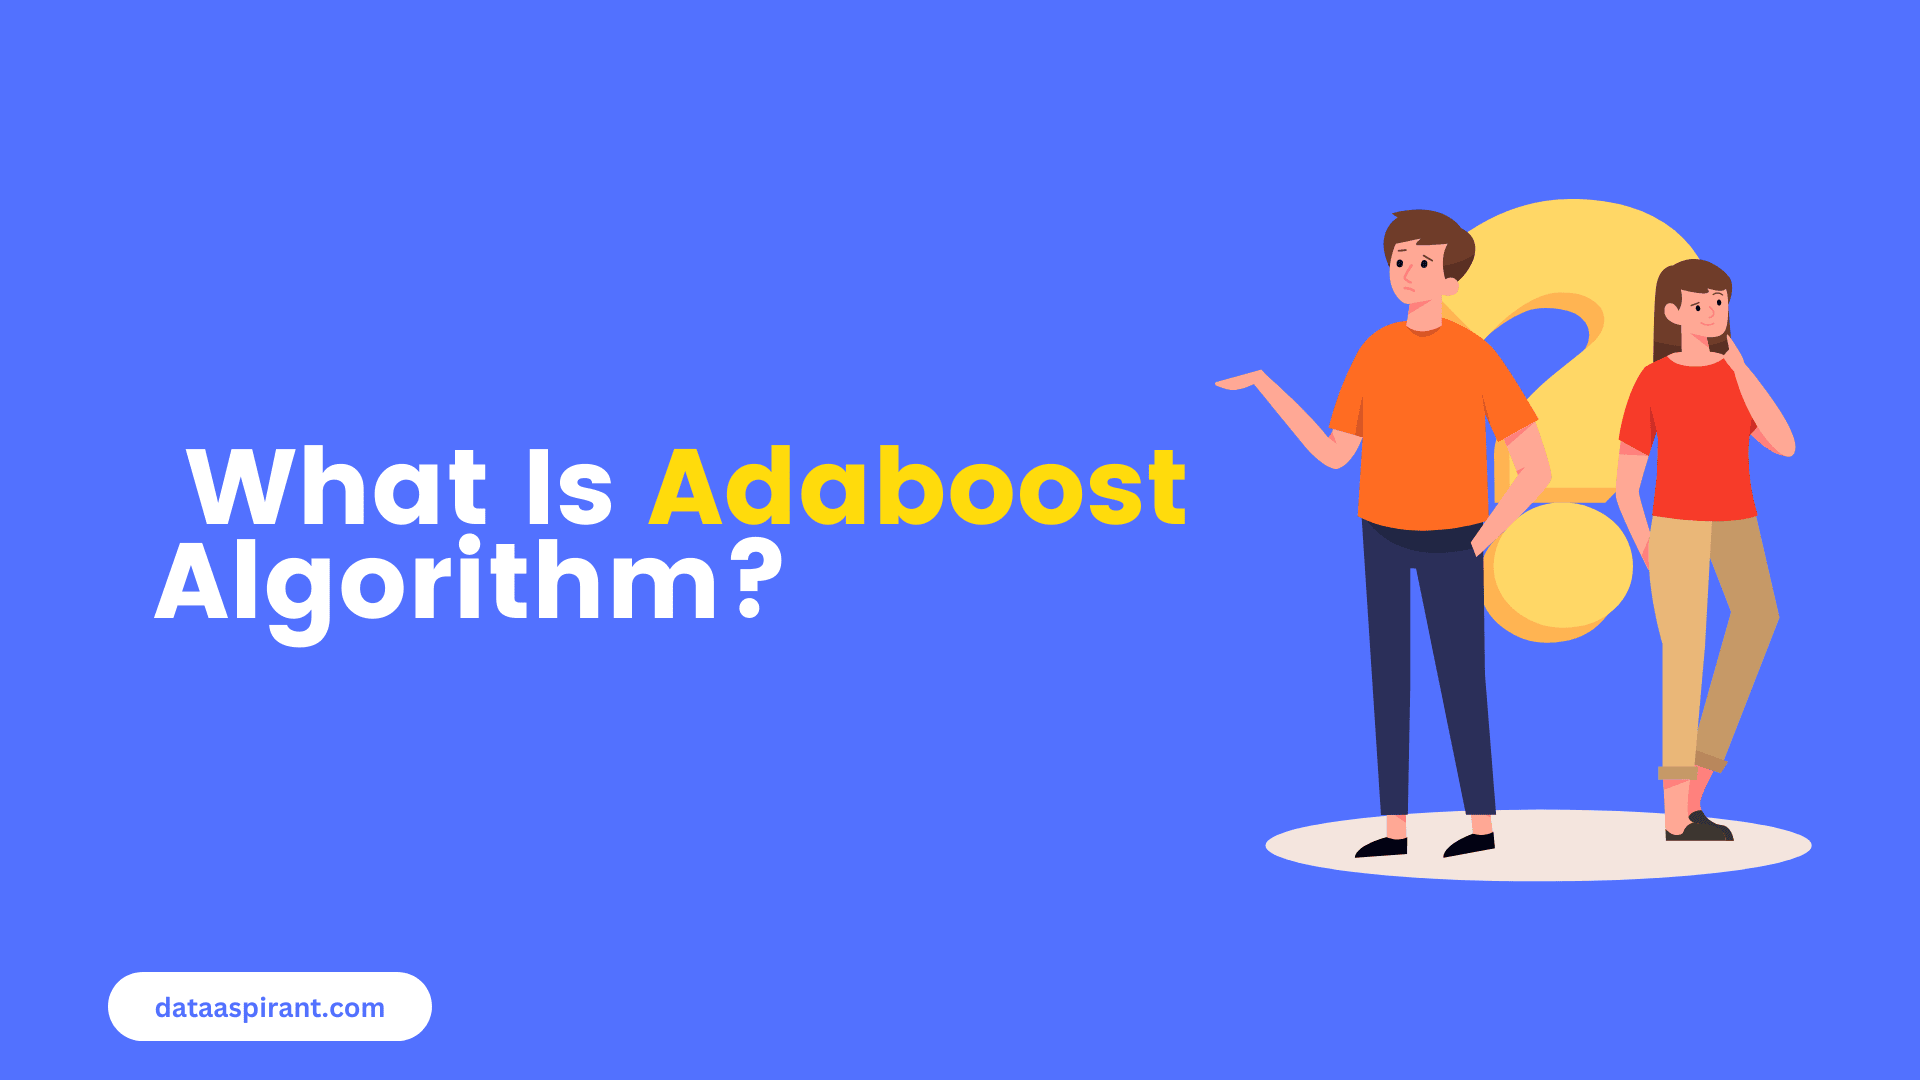 What is Adaboost Algorithm